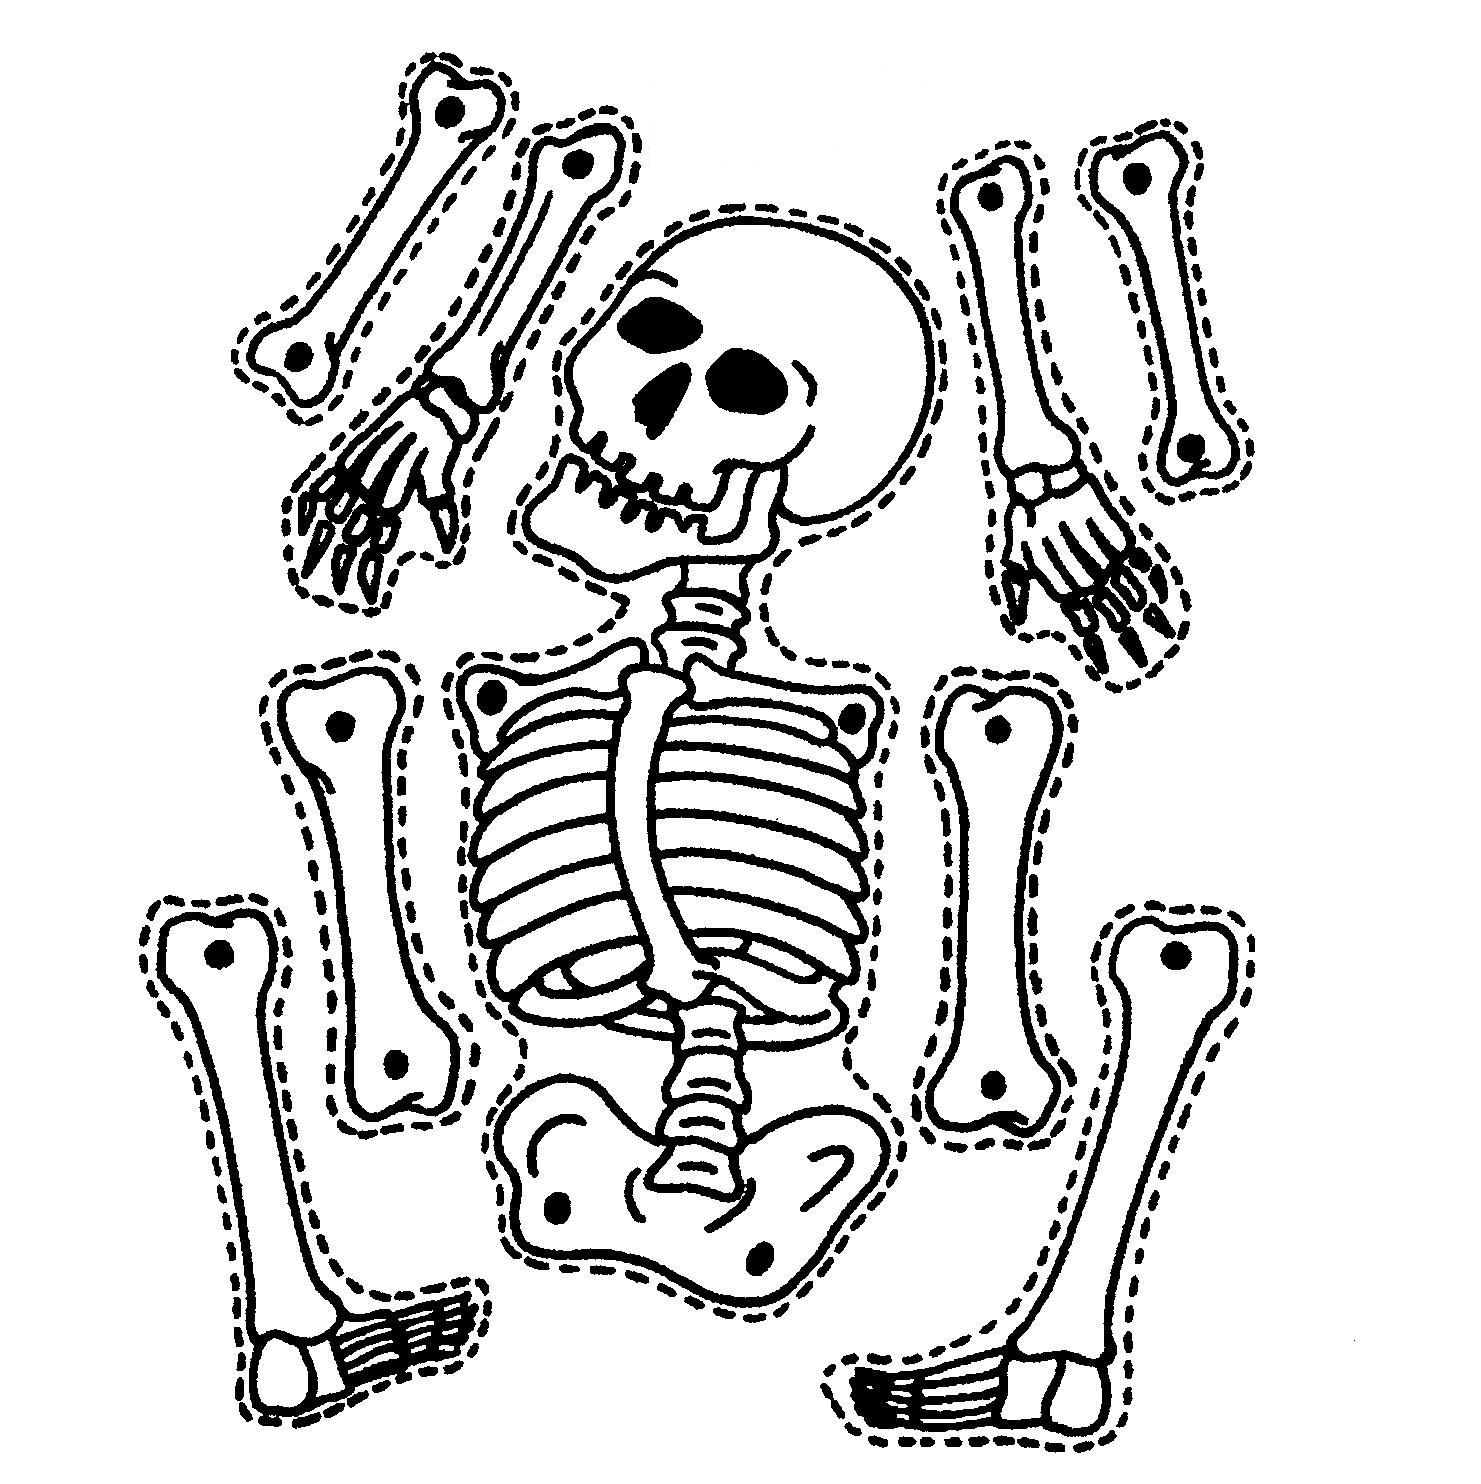 skeleton-outline-for-kids-clipart-best